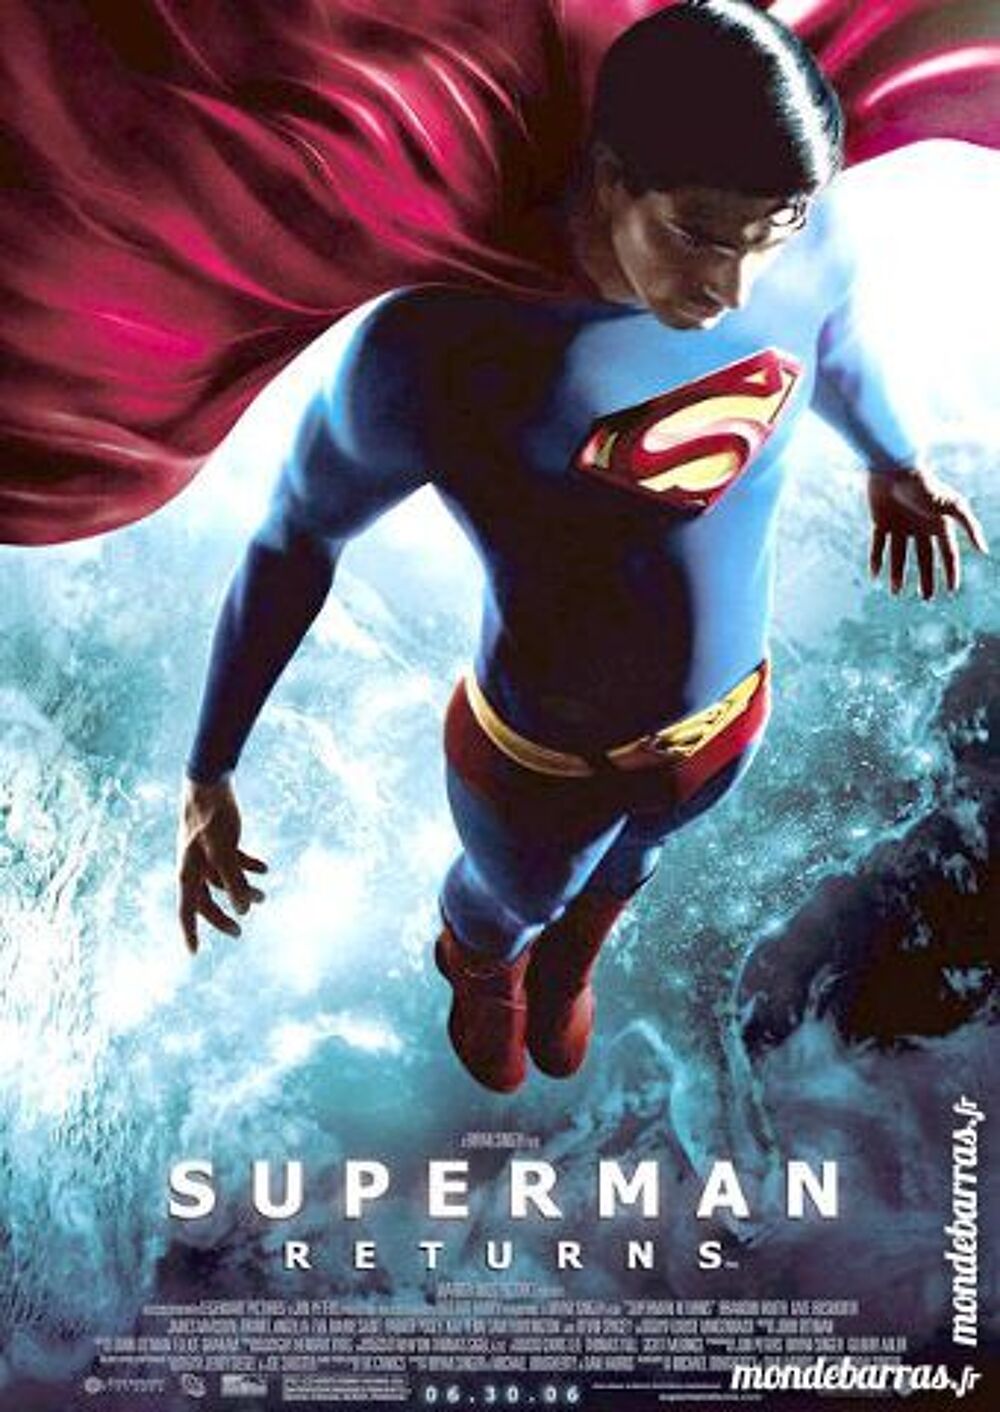 K7 Vhs: Superman Returns (69) DVD et blu-ray